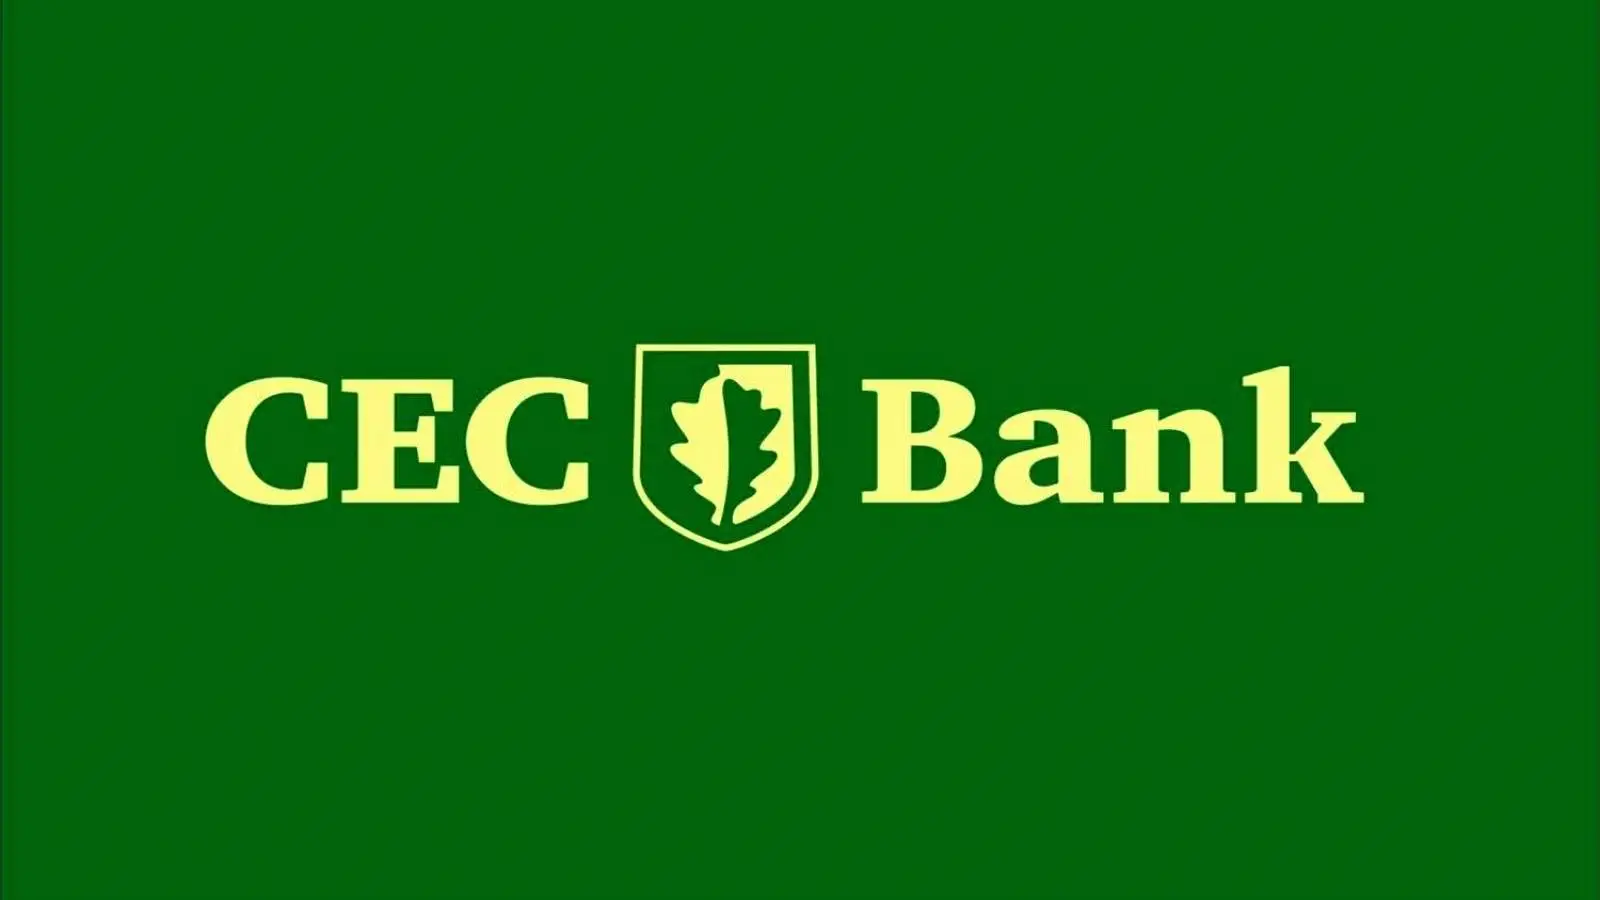 CEC Bank Anuntul ULTIM MOMENT Schimbari Clientii Romani